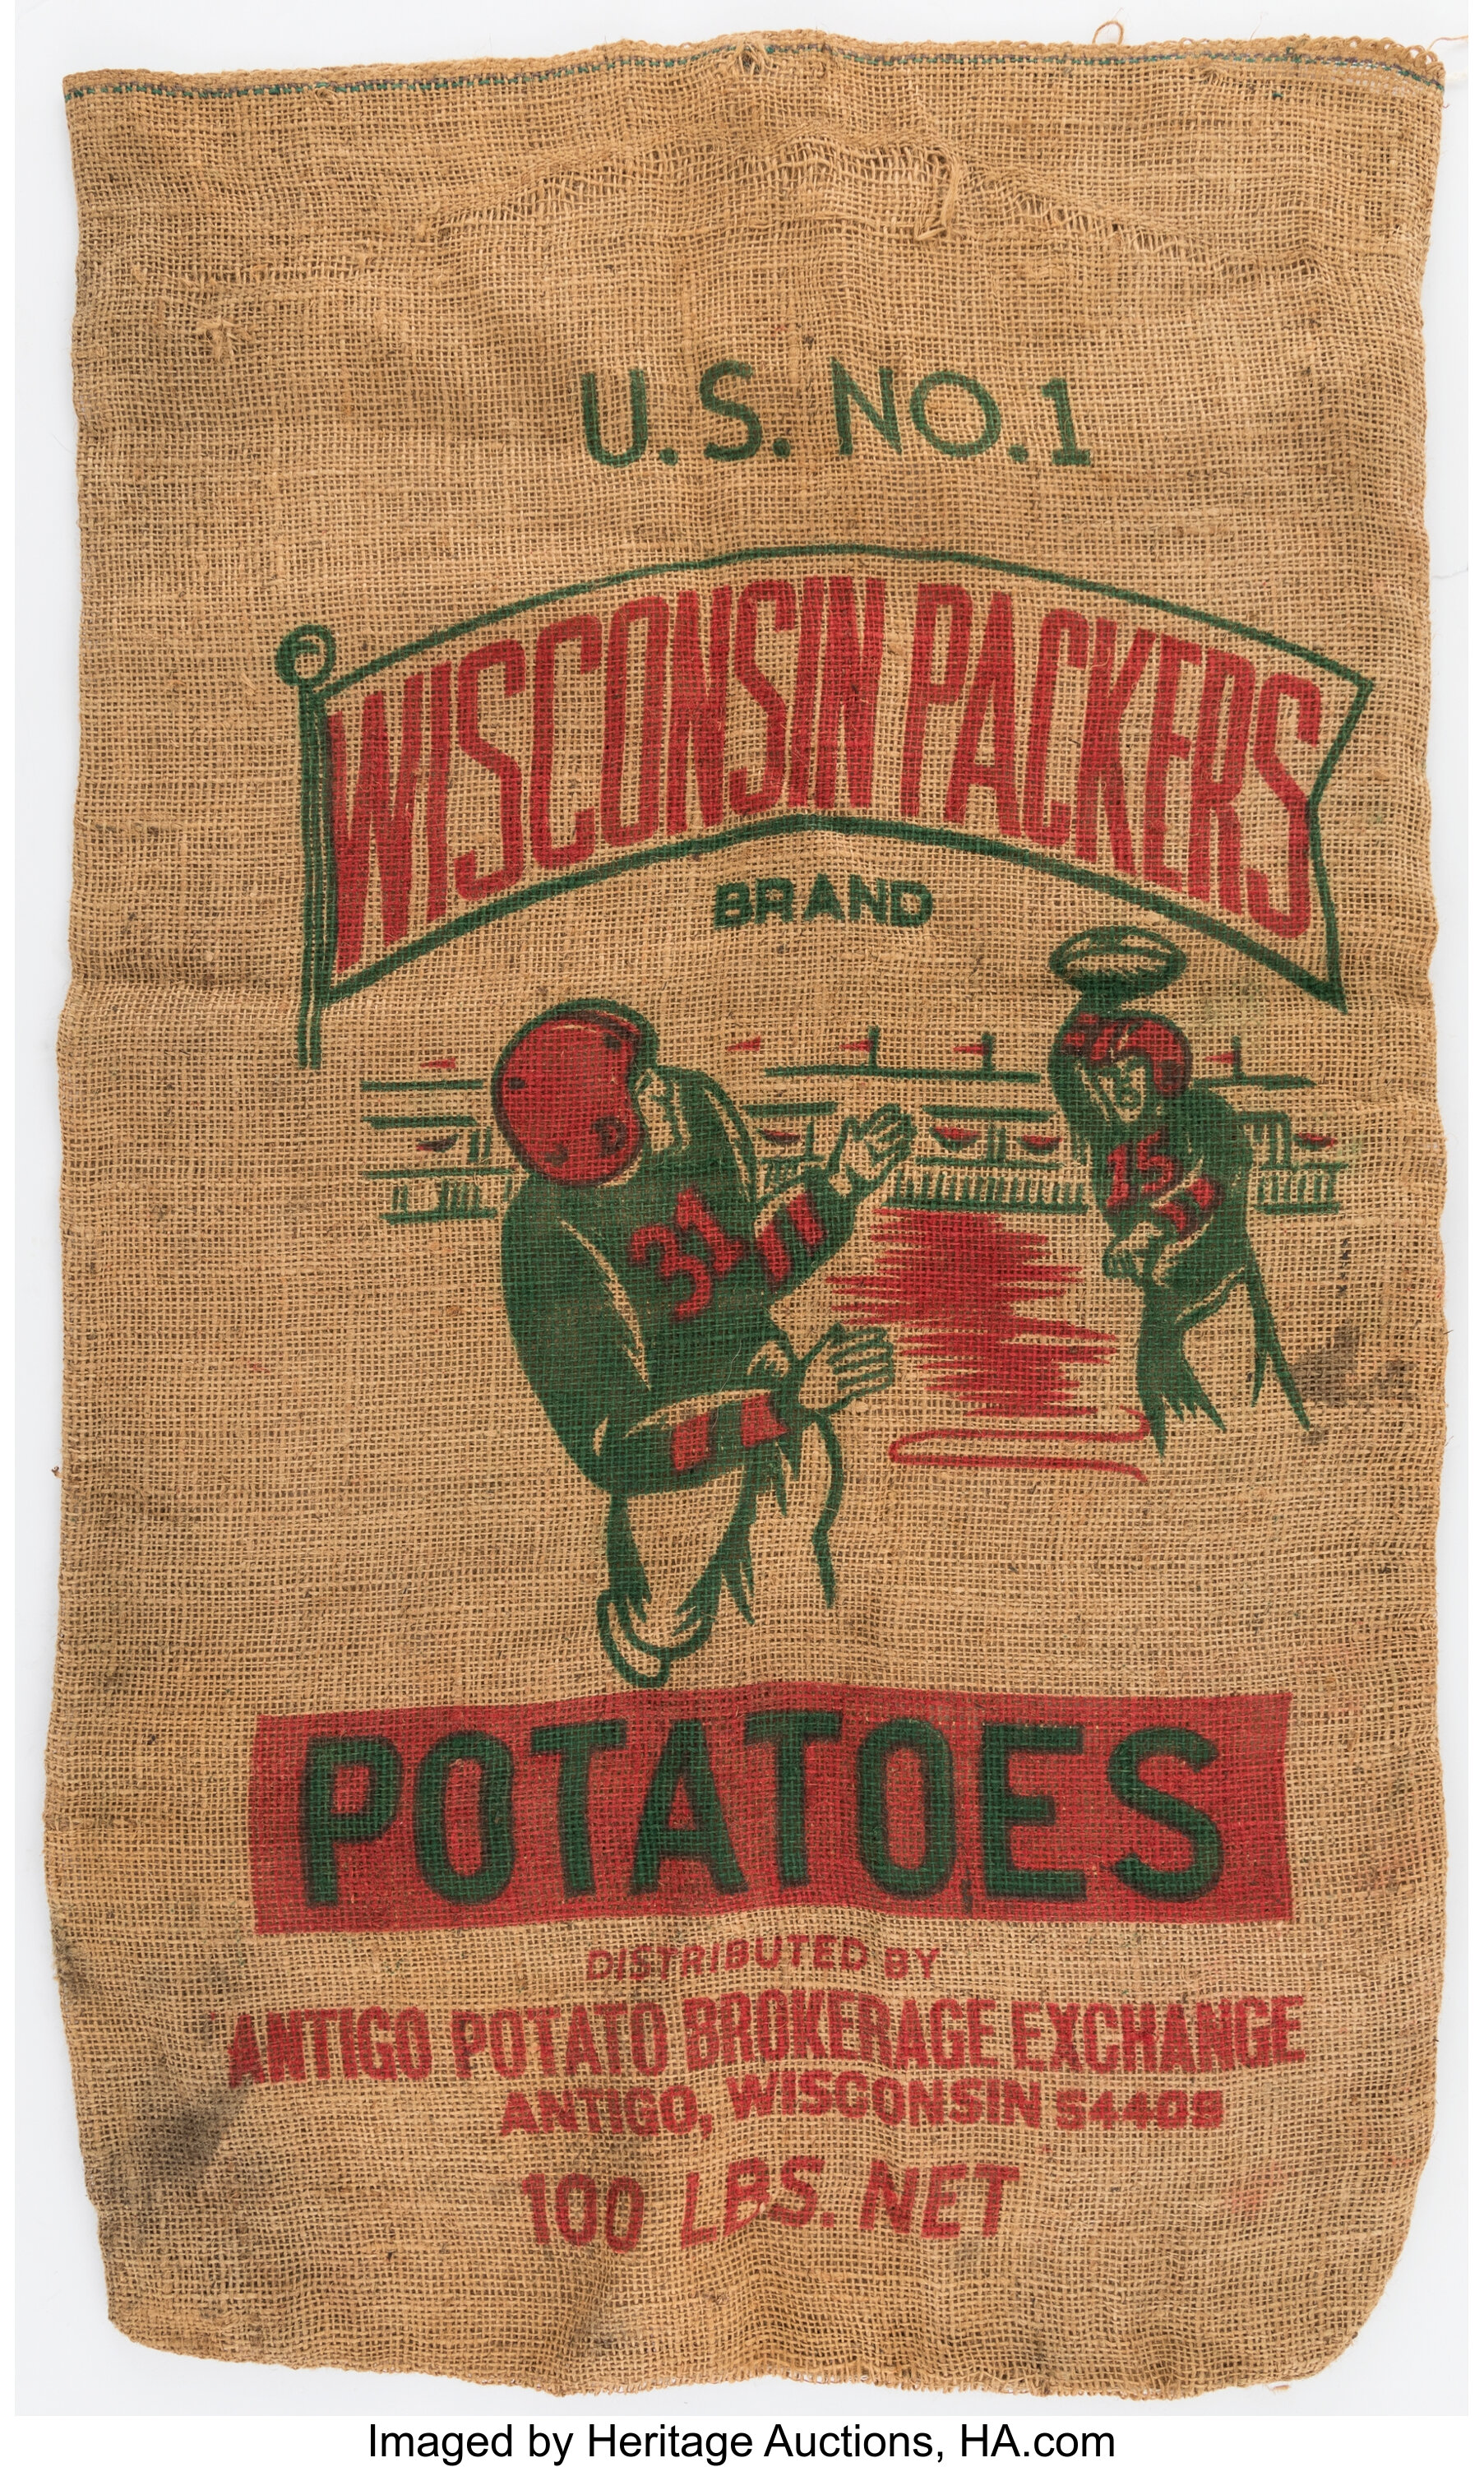 Vintage 'Wisconsin Packers' Potato Sack. Miscellaneous, Lot #44196